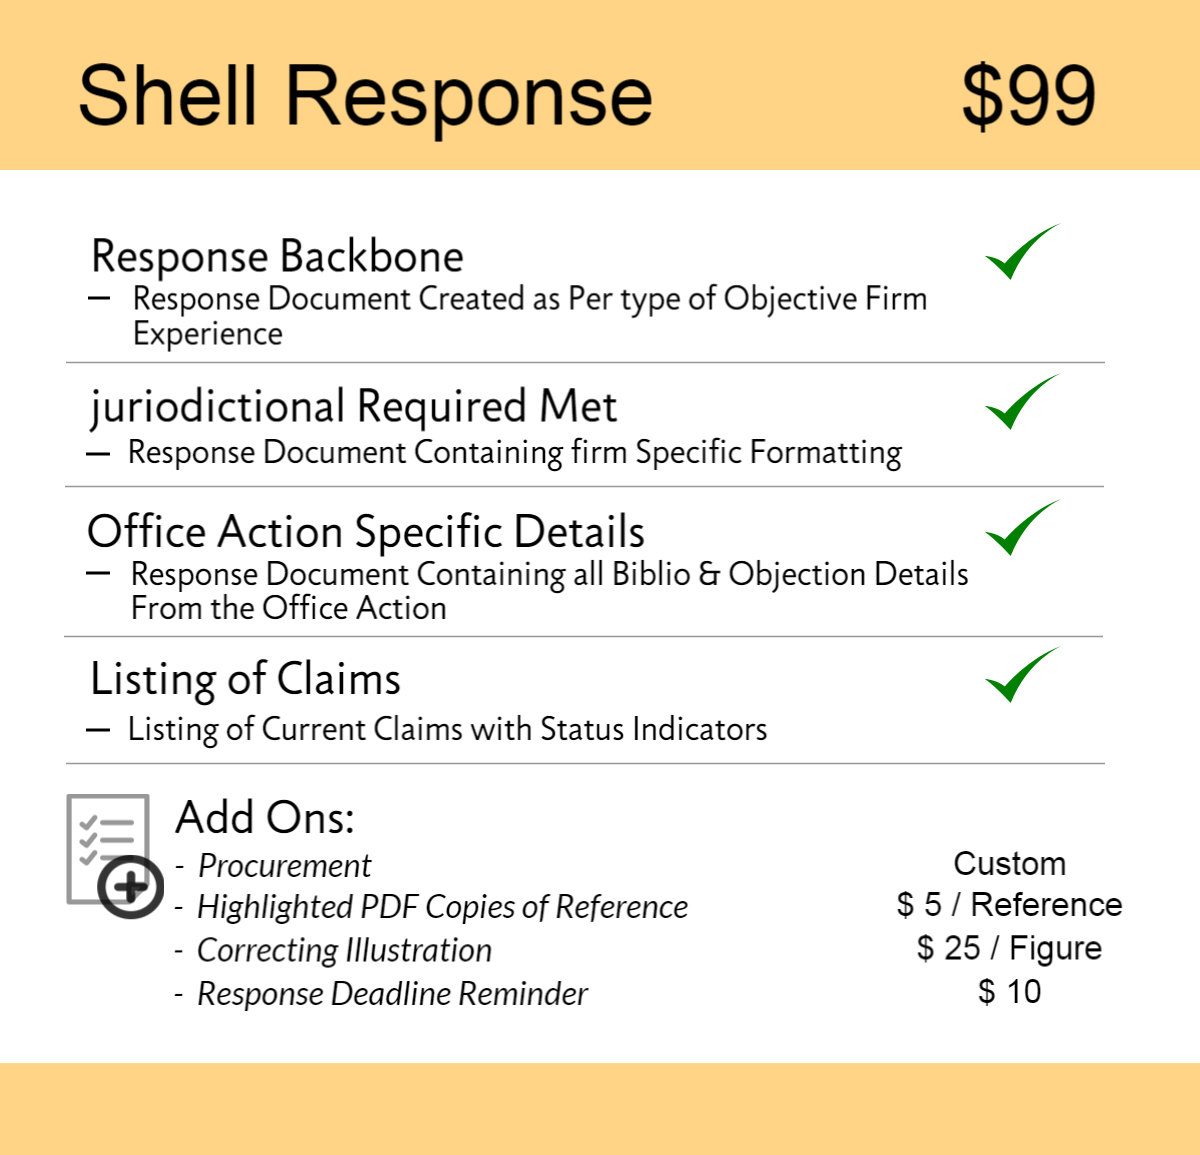 Shell Response